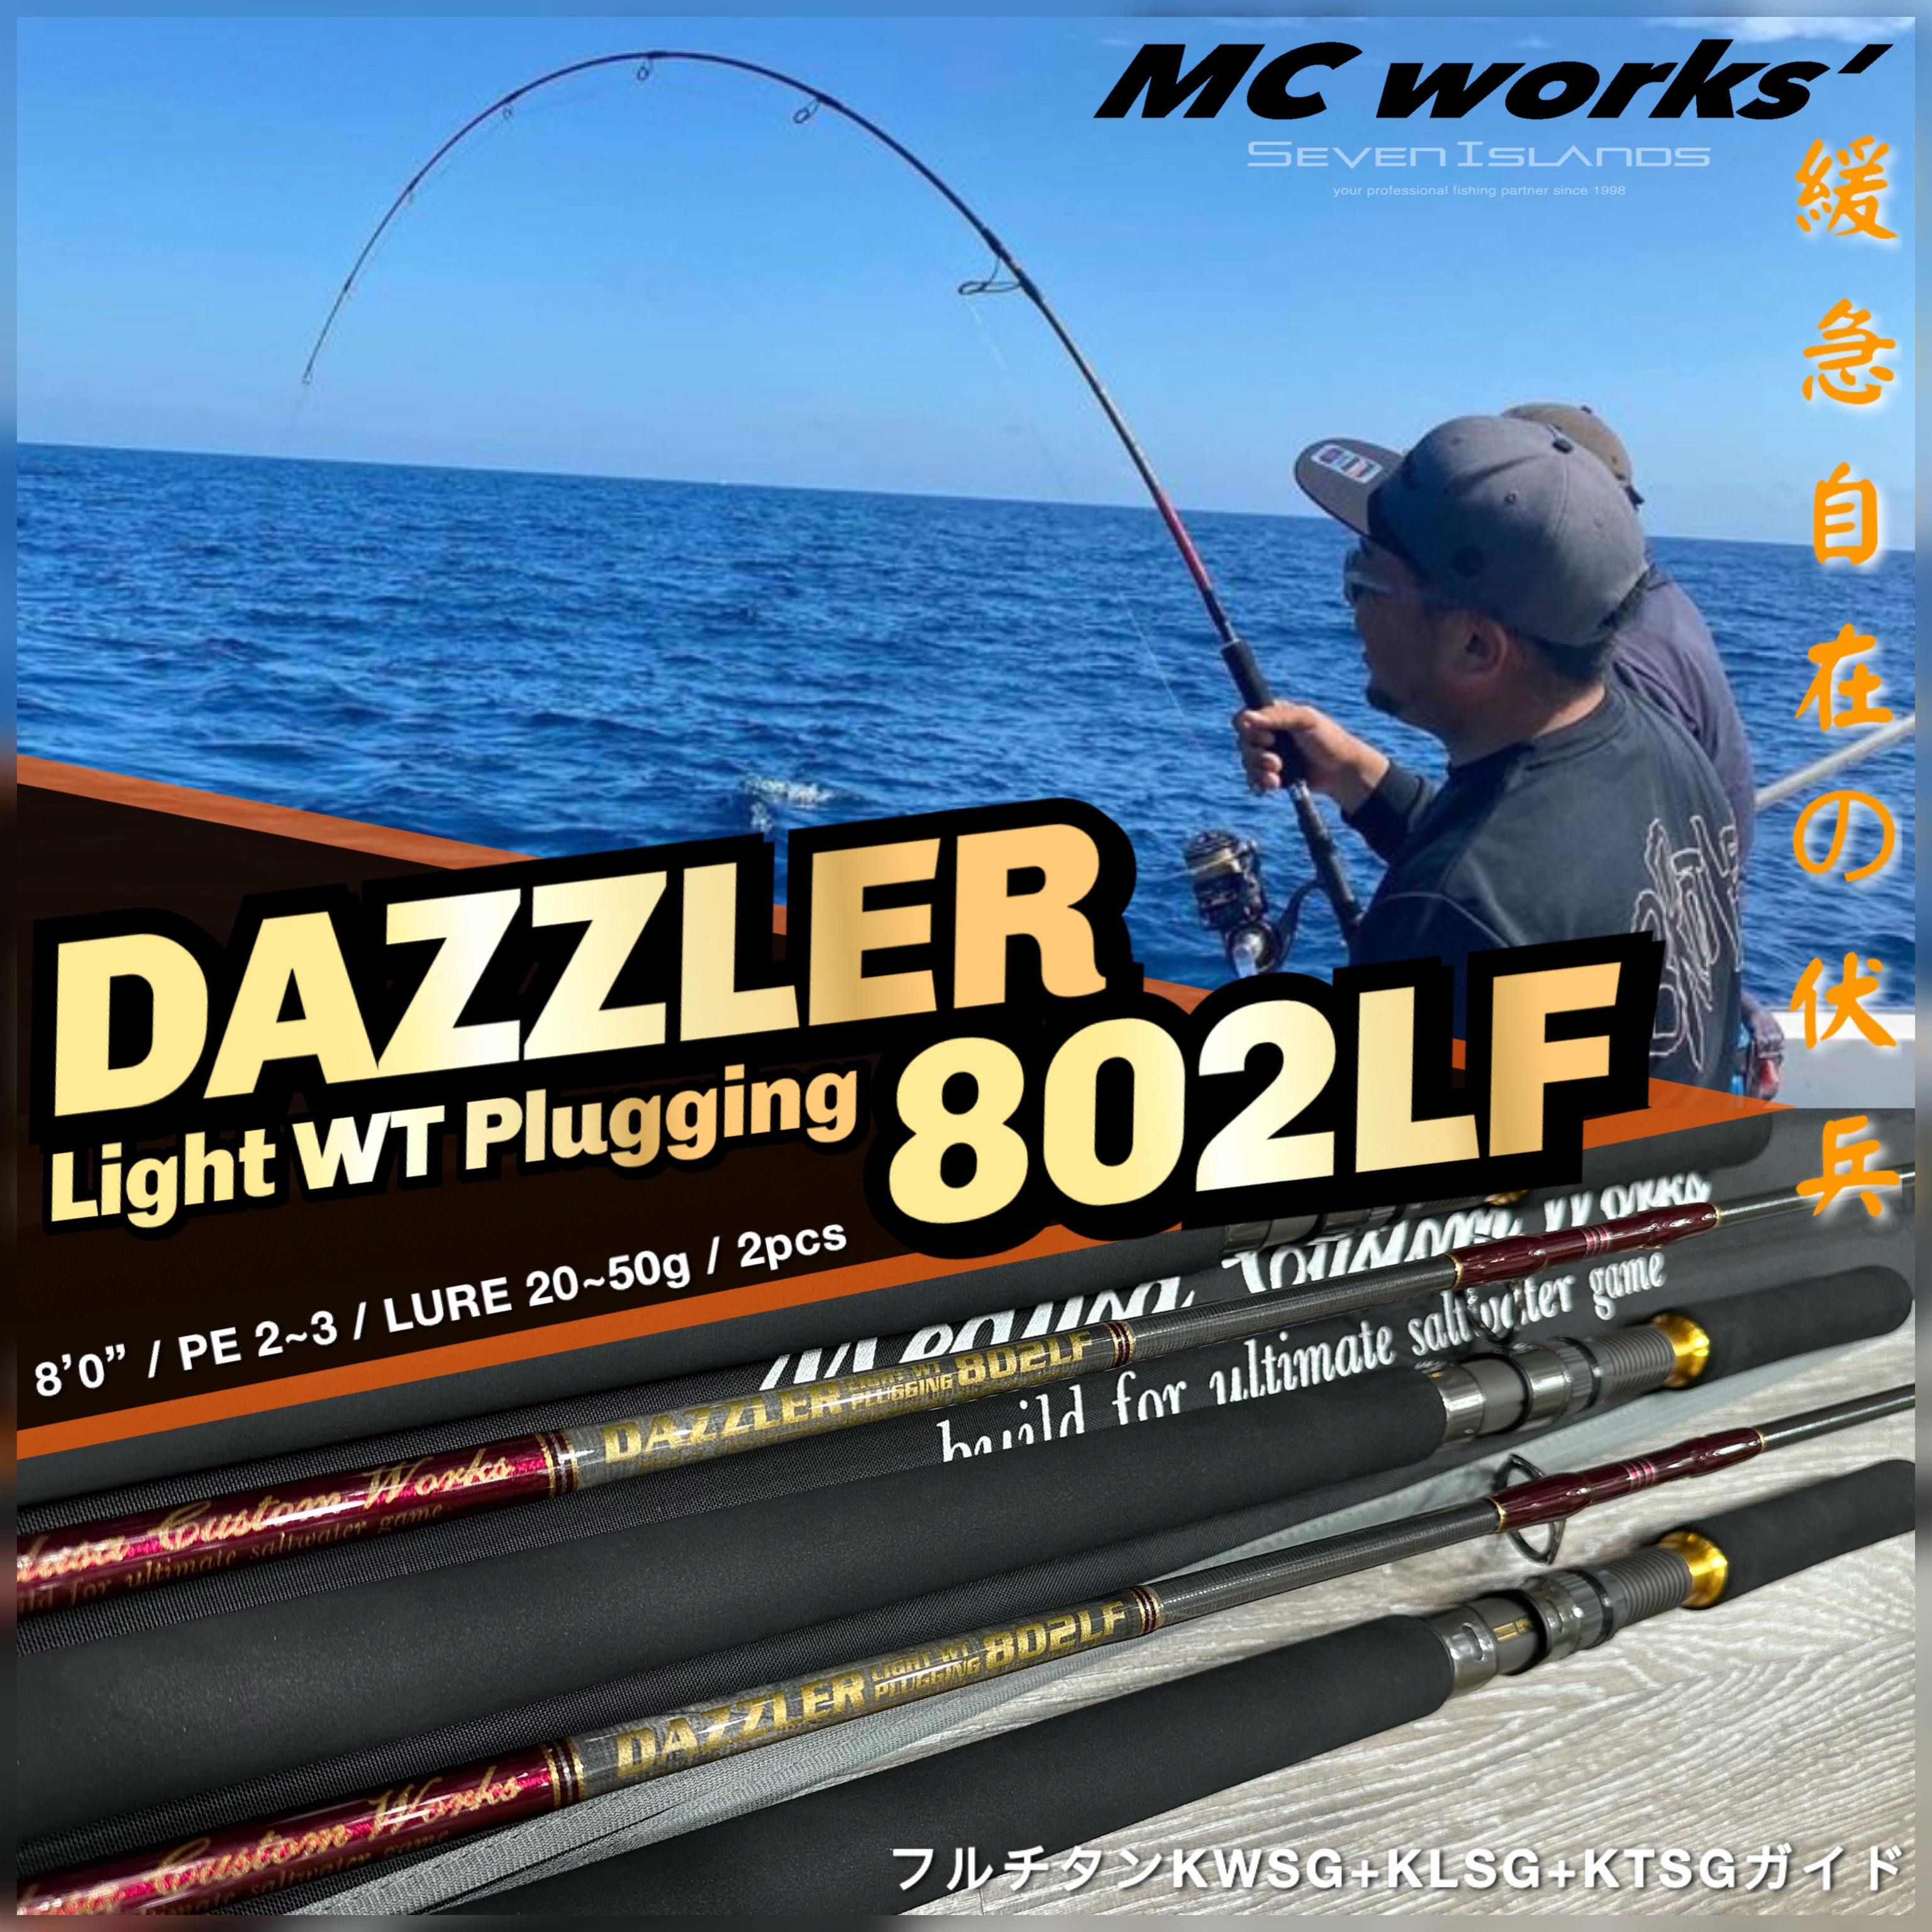 MC WORKS' Dazzler 802LF Casting Rod